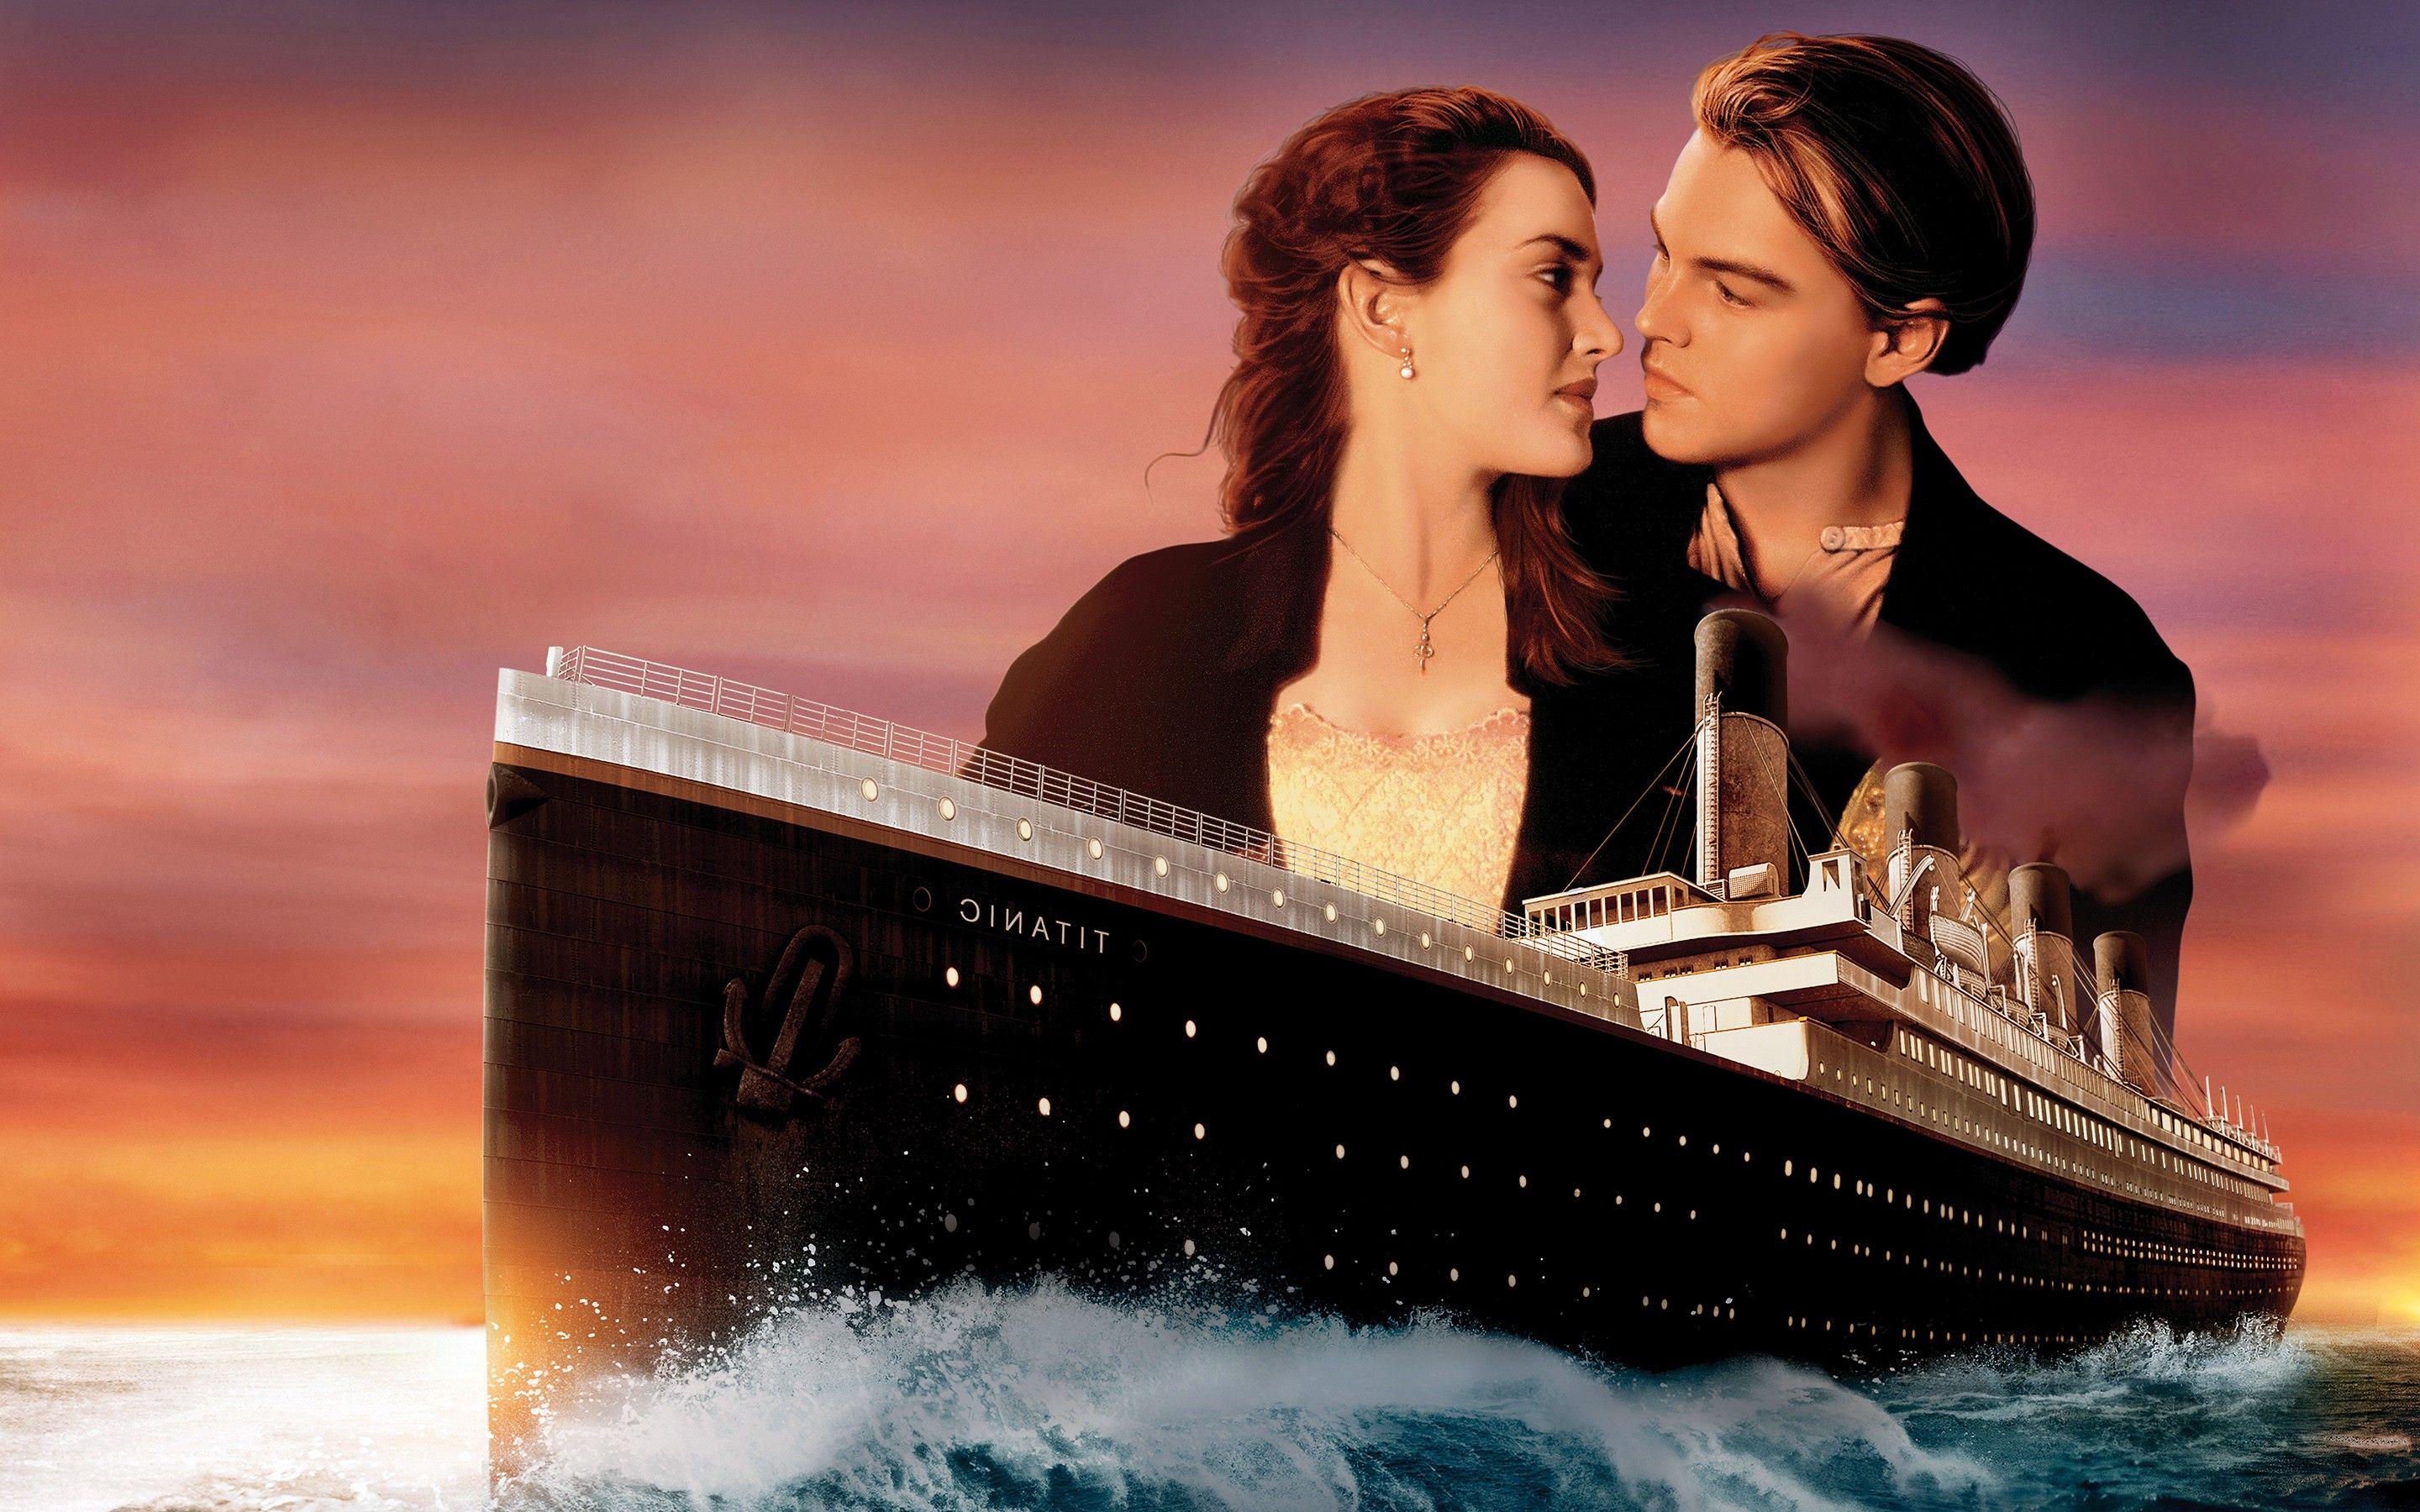 Titanic Movie Full HD, HD Movies, 4k Wallpaper, Image, Background